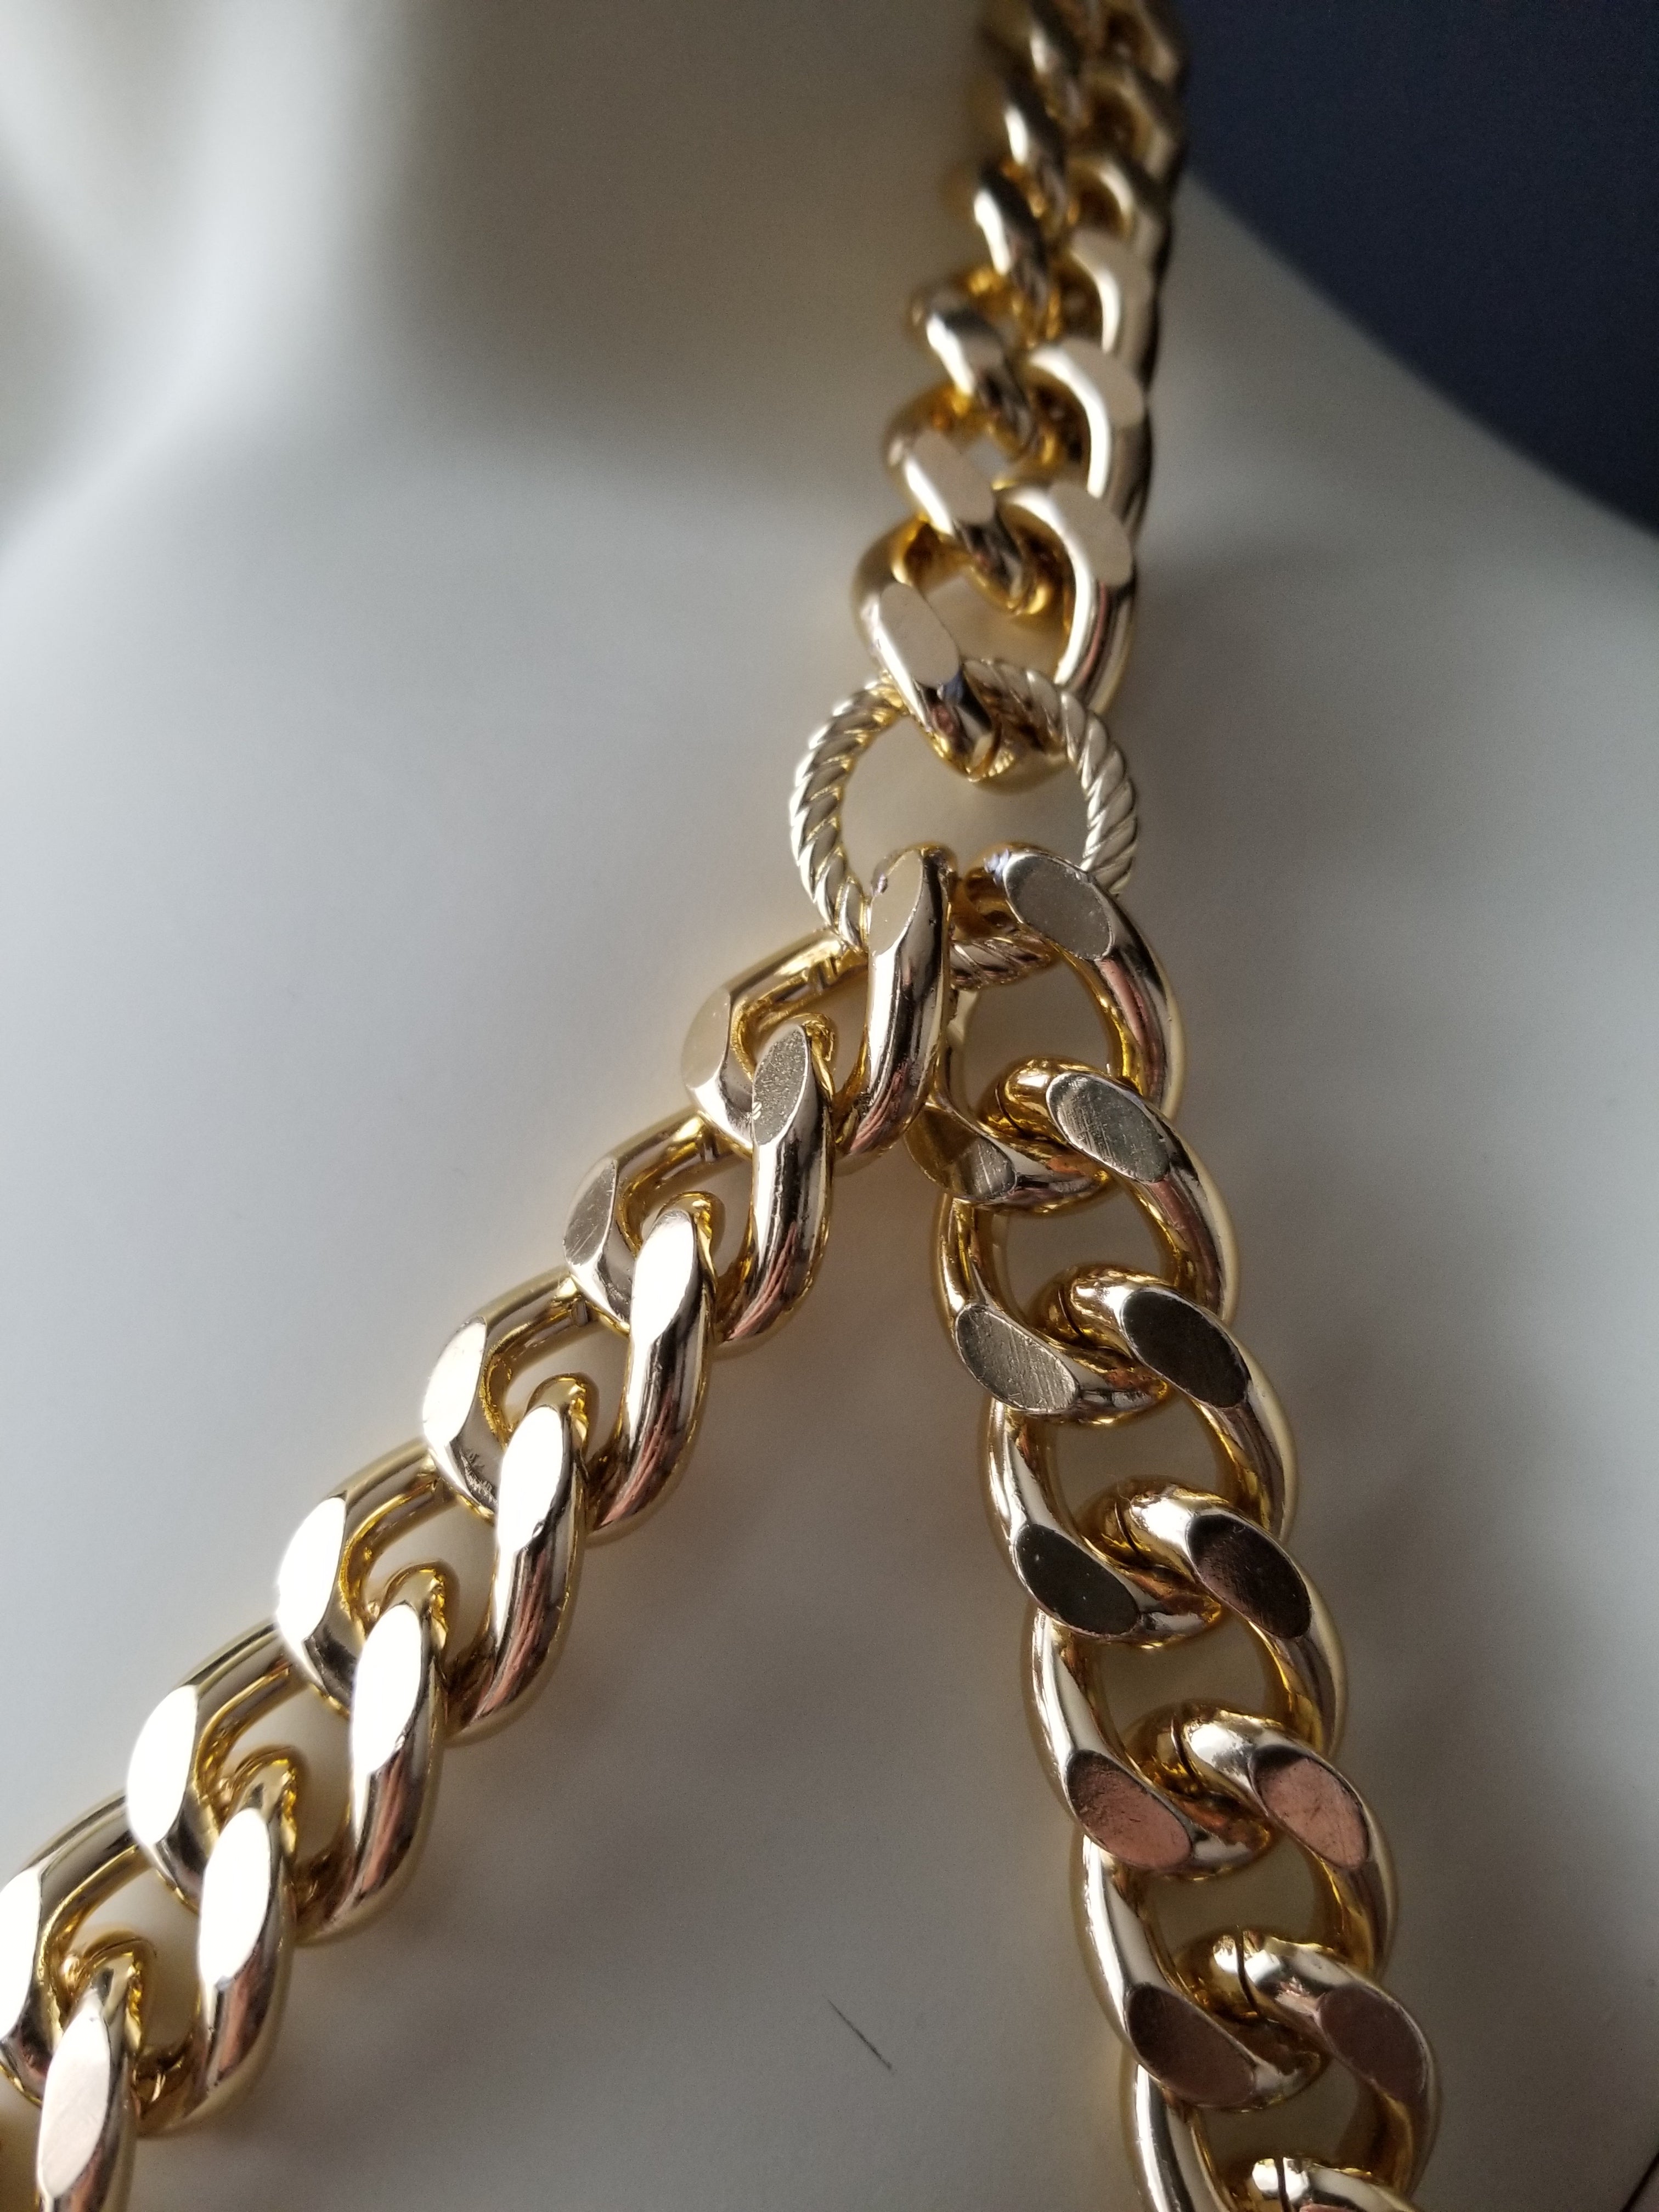 14k Gold Filled Dainty Chain Bralette Halter Top Body Chain | VERSION